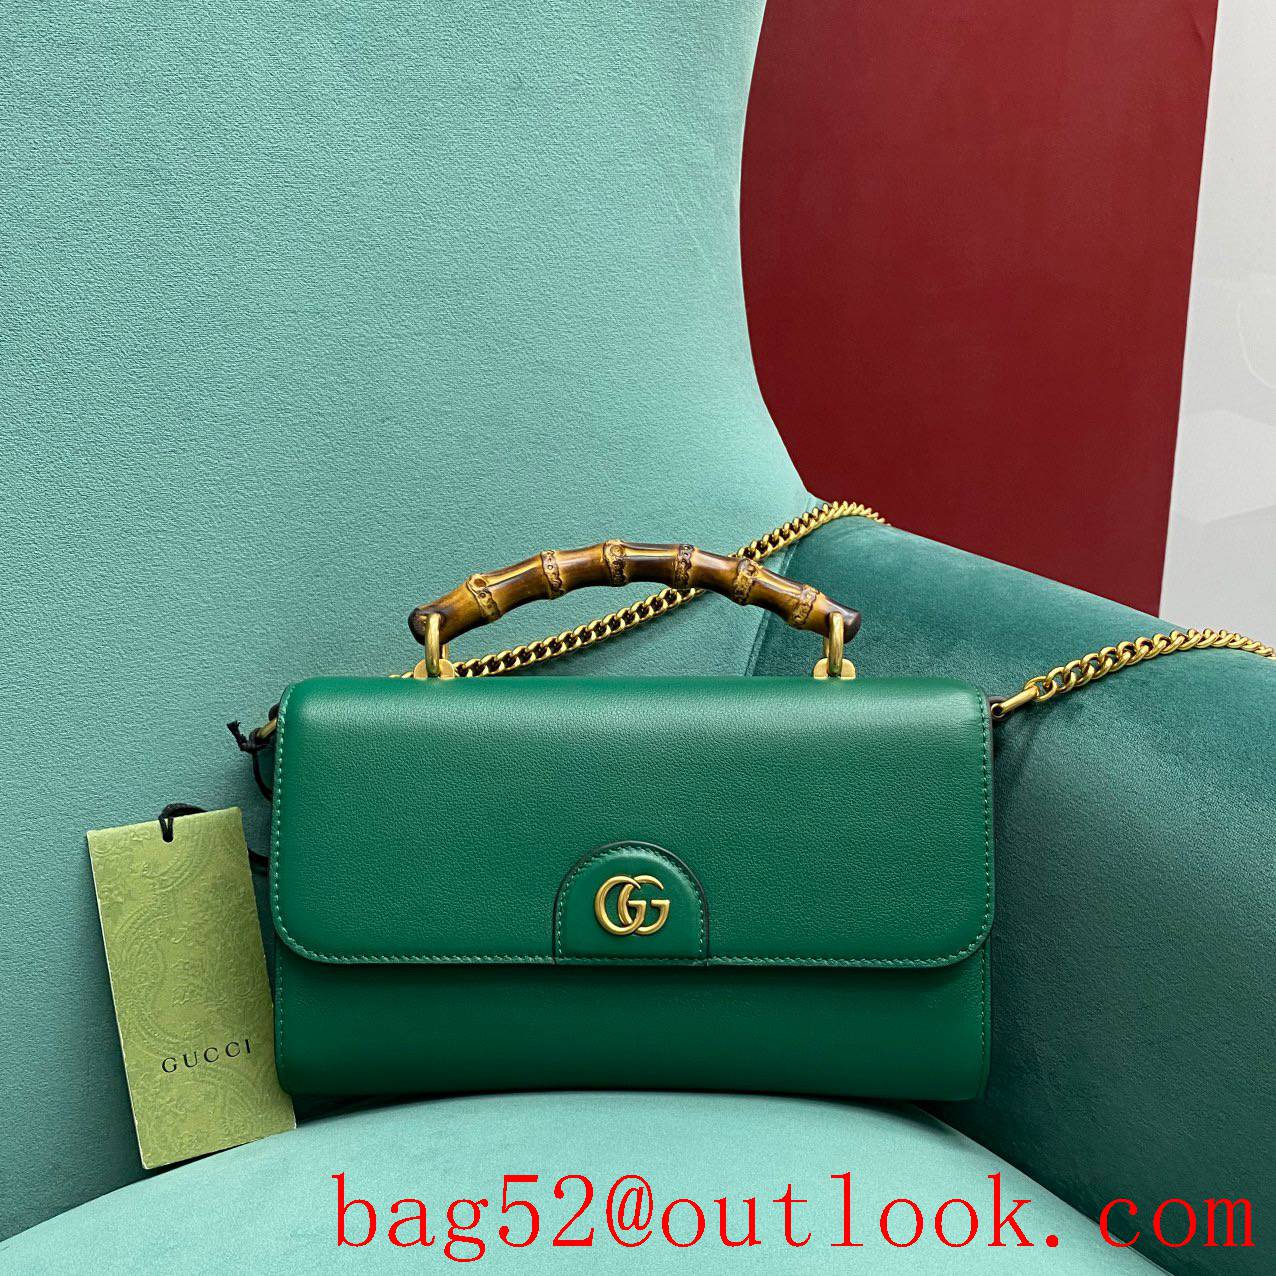 Gucci leather Bamboo chain green shoulder handbag